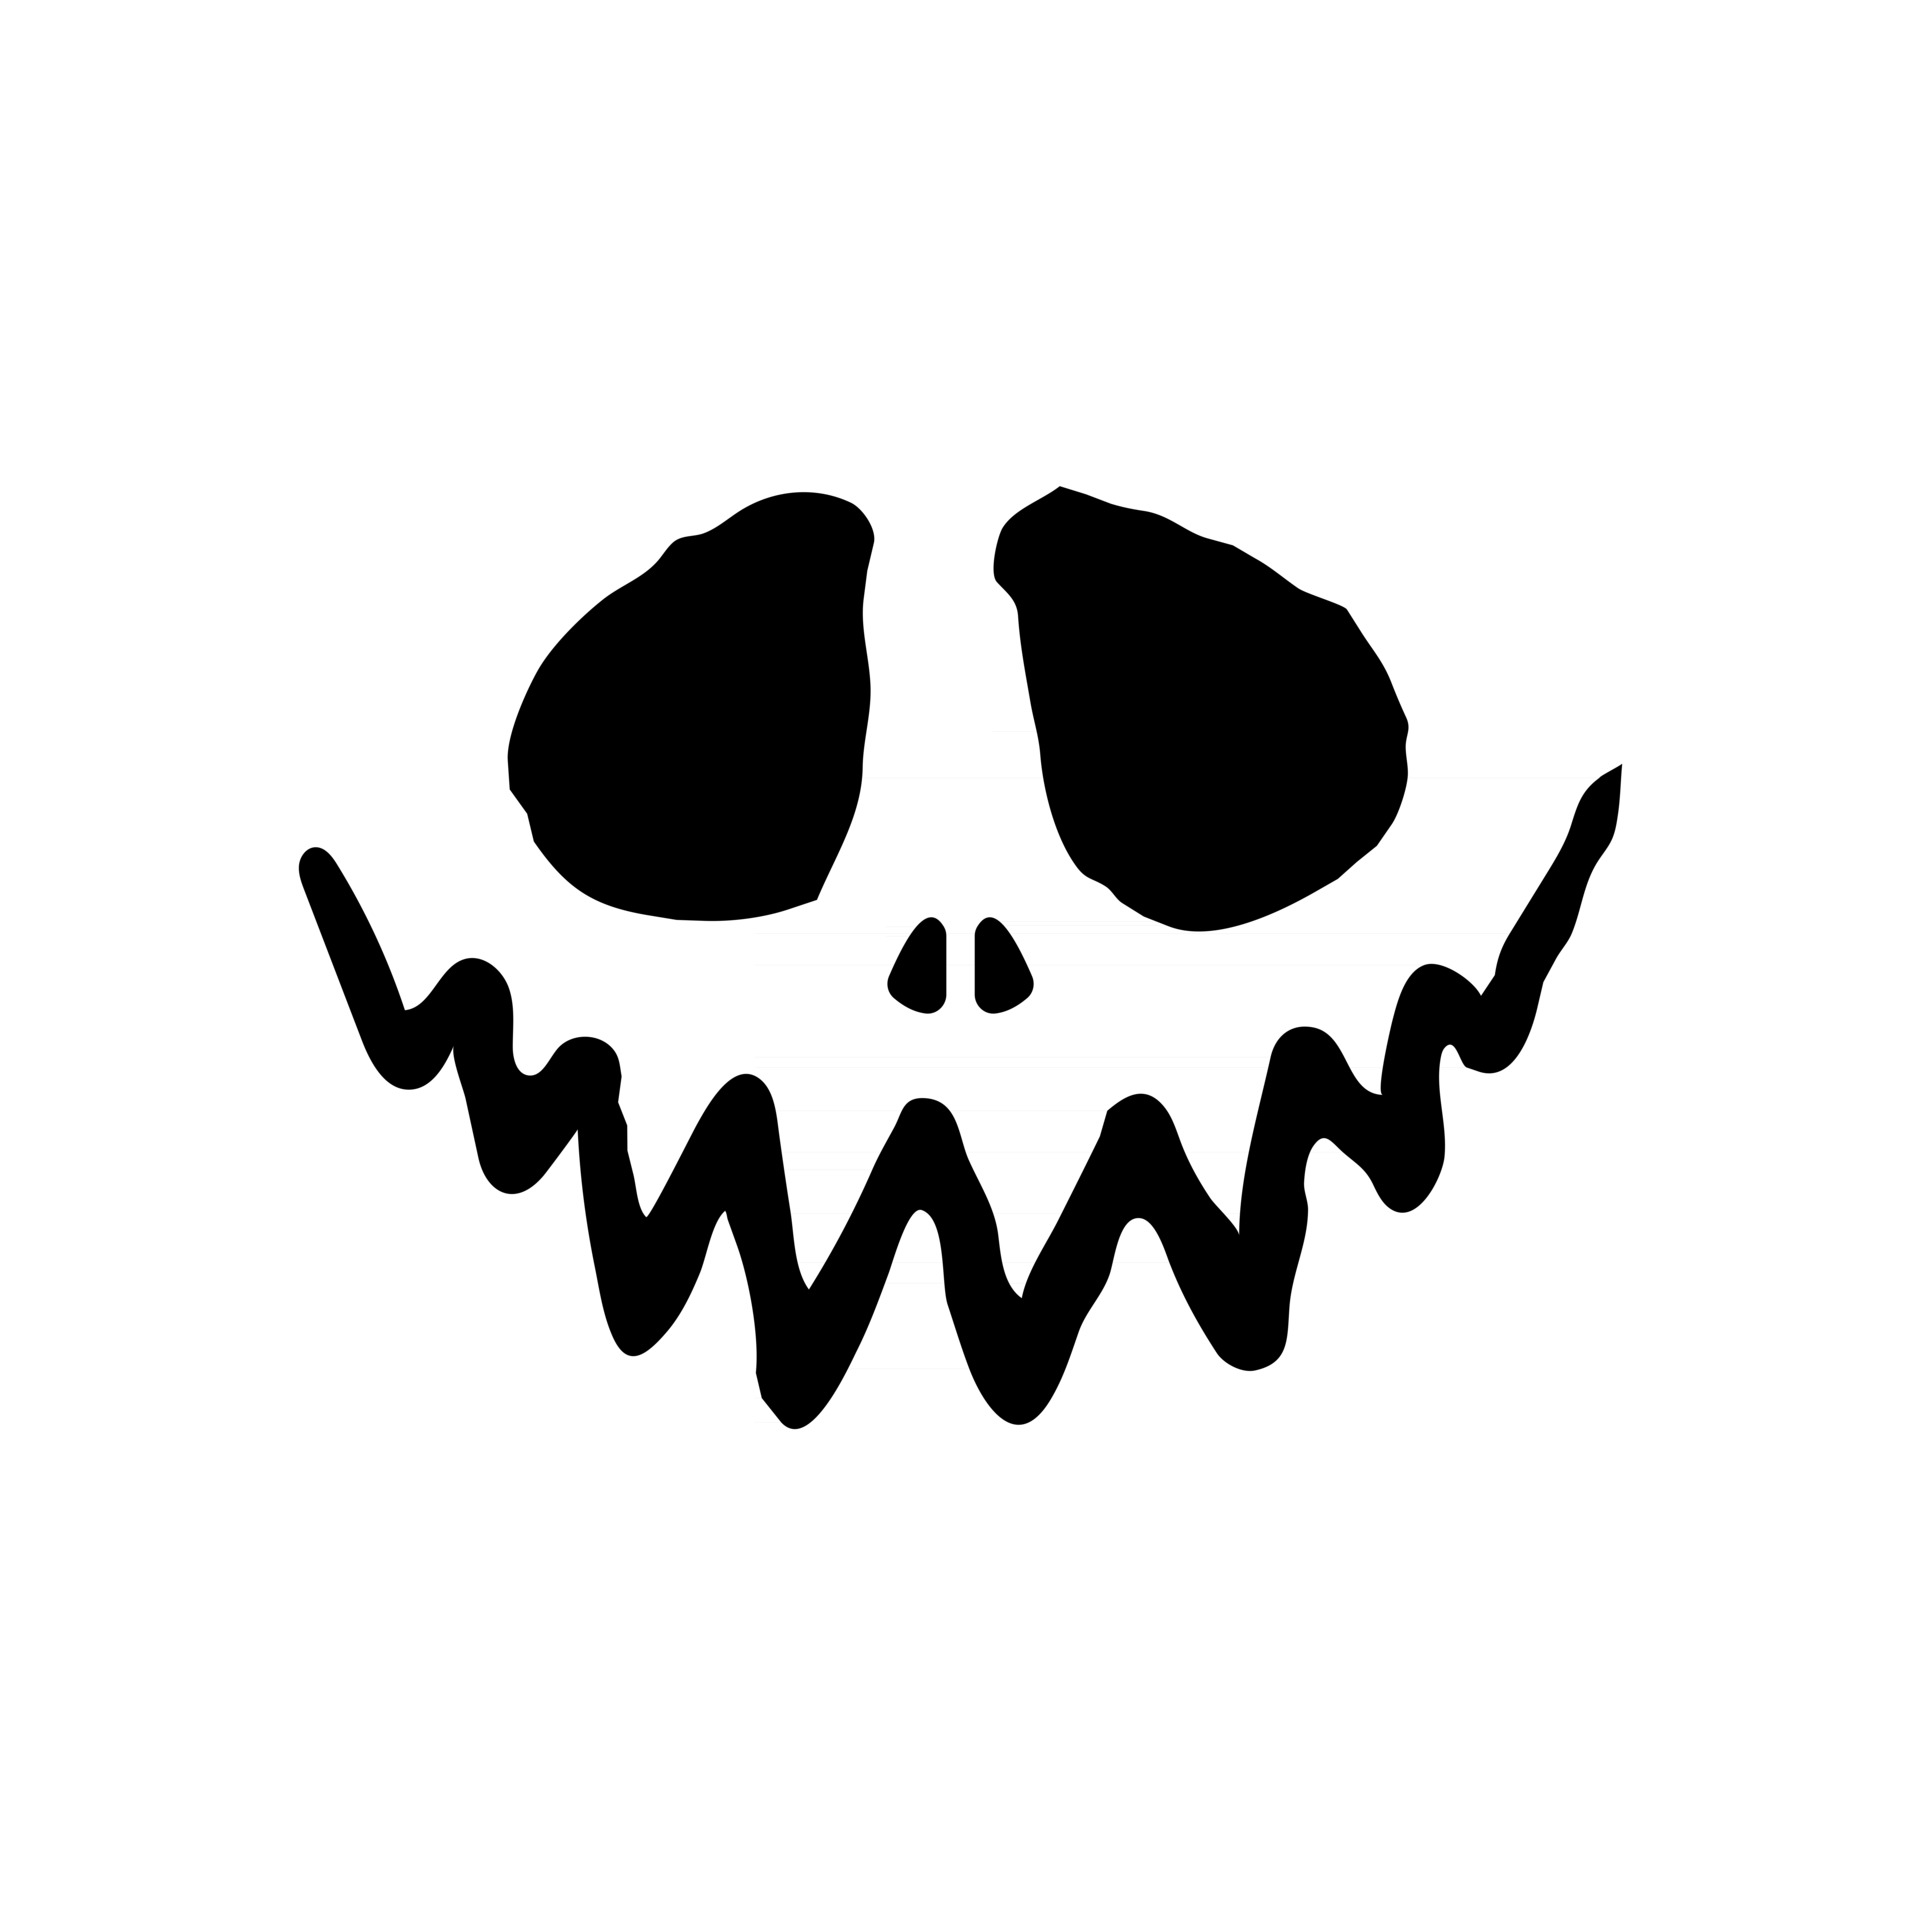 rostos assustadores de abóbora de halloween ou logotipo fantasma premium  modelo elegante vetor eps 10 11593307 Vetor no Vecteezy